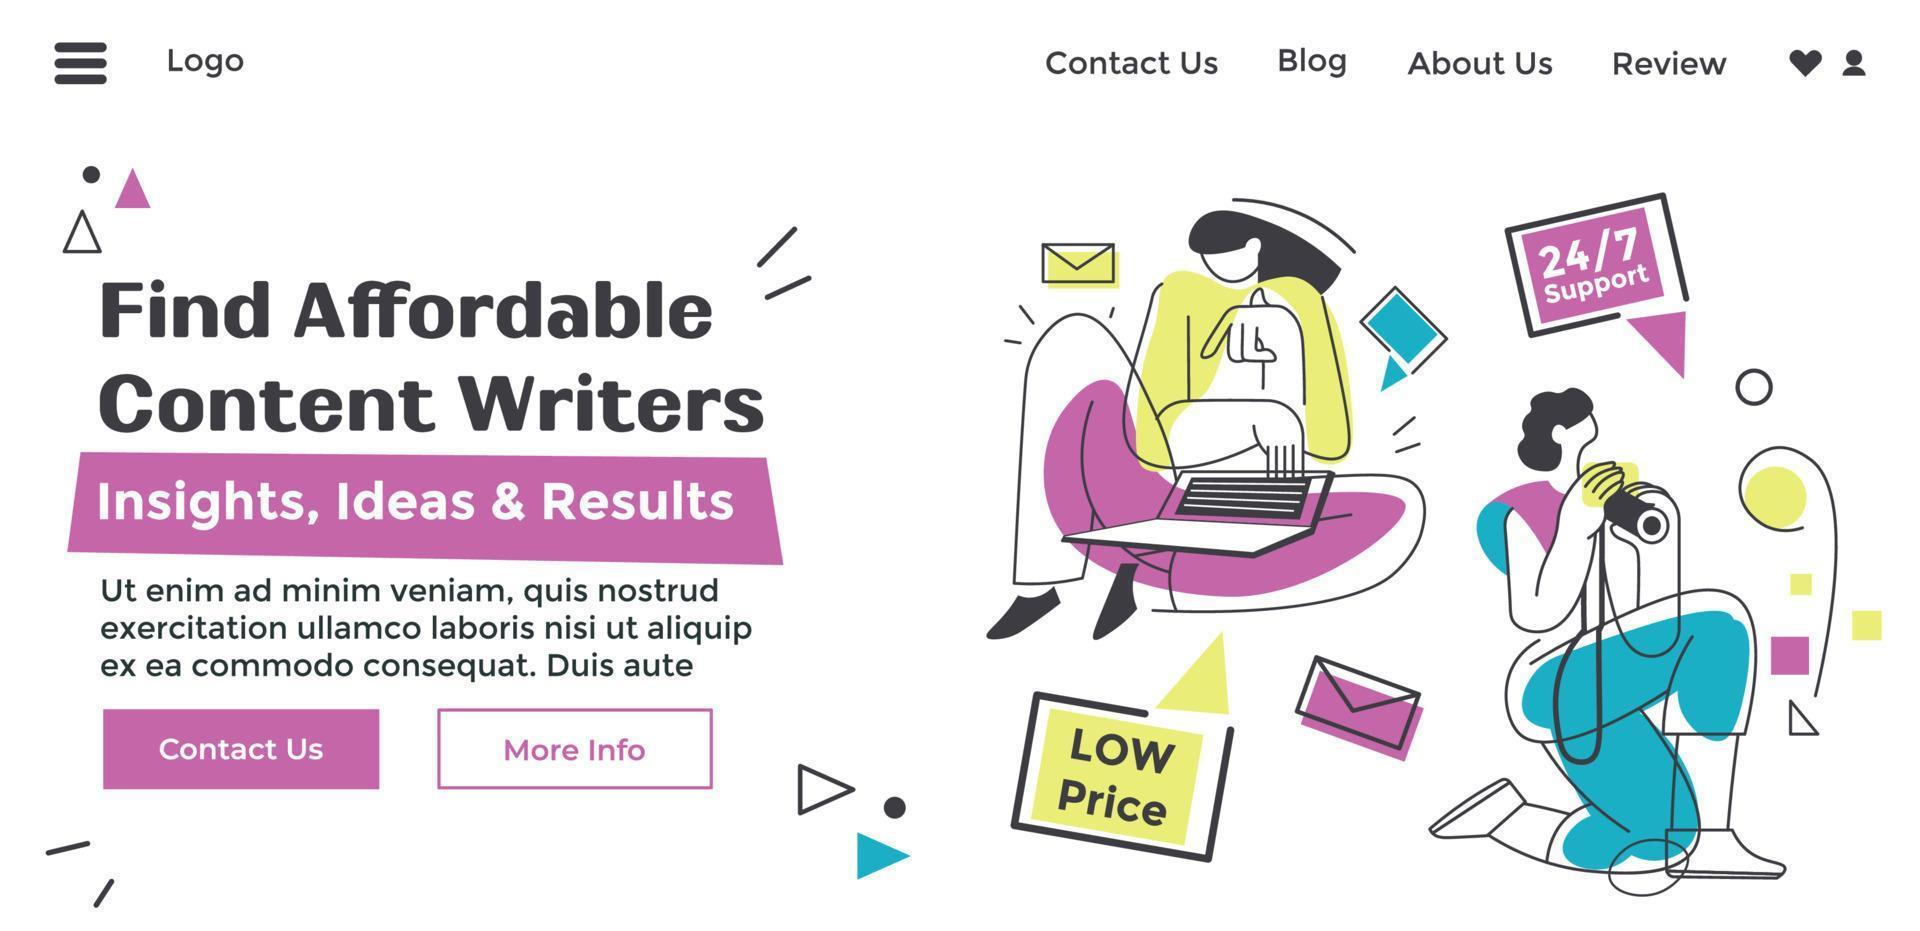 encontrar escritores de contenido asequibles, ideas de ideas vector